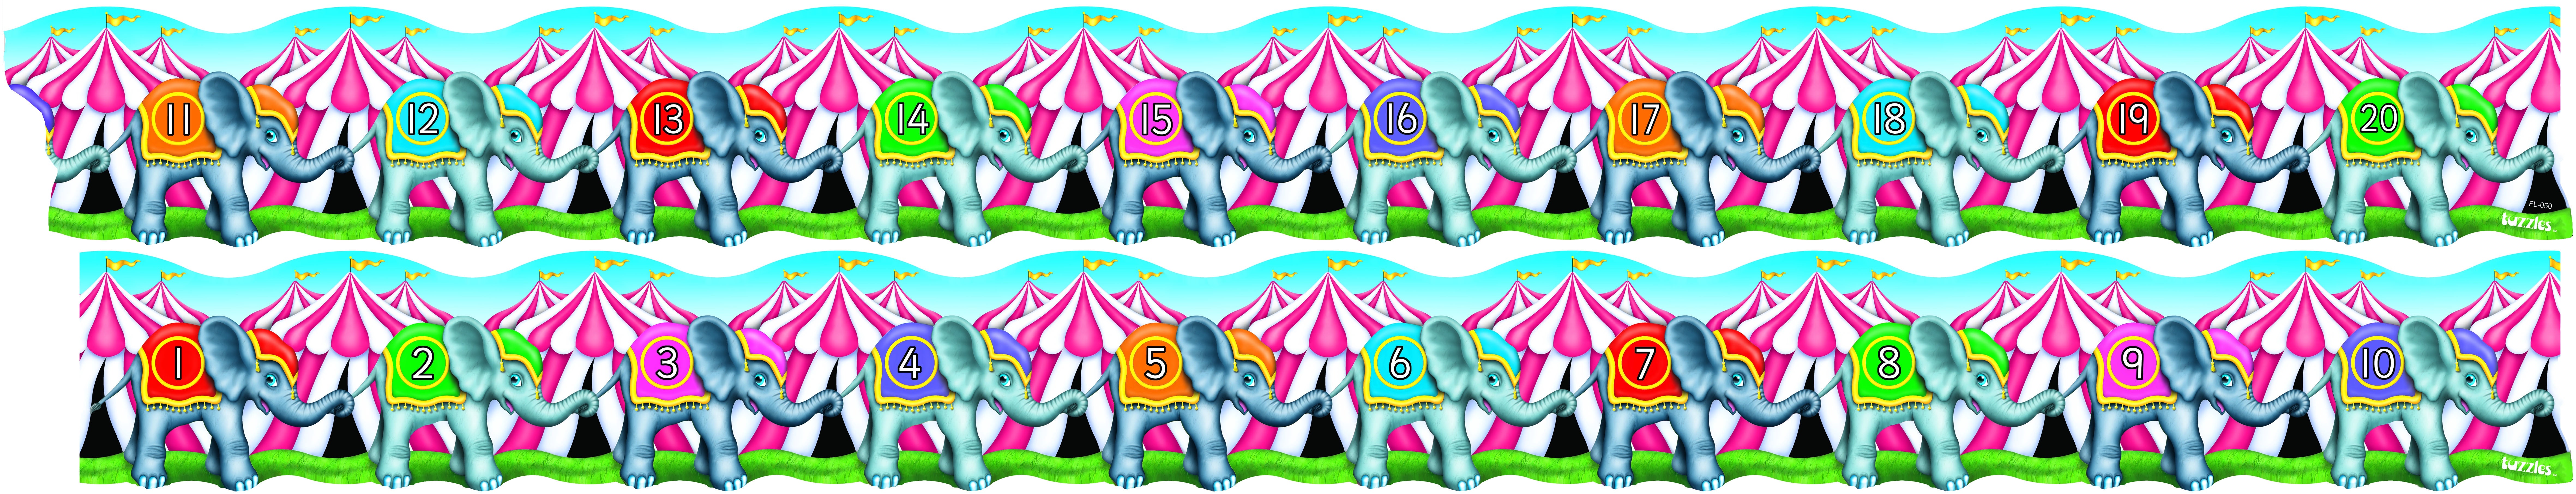 Tuzzles Counting Elephants 1-20 40pcs